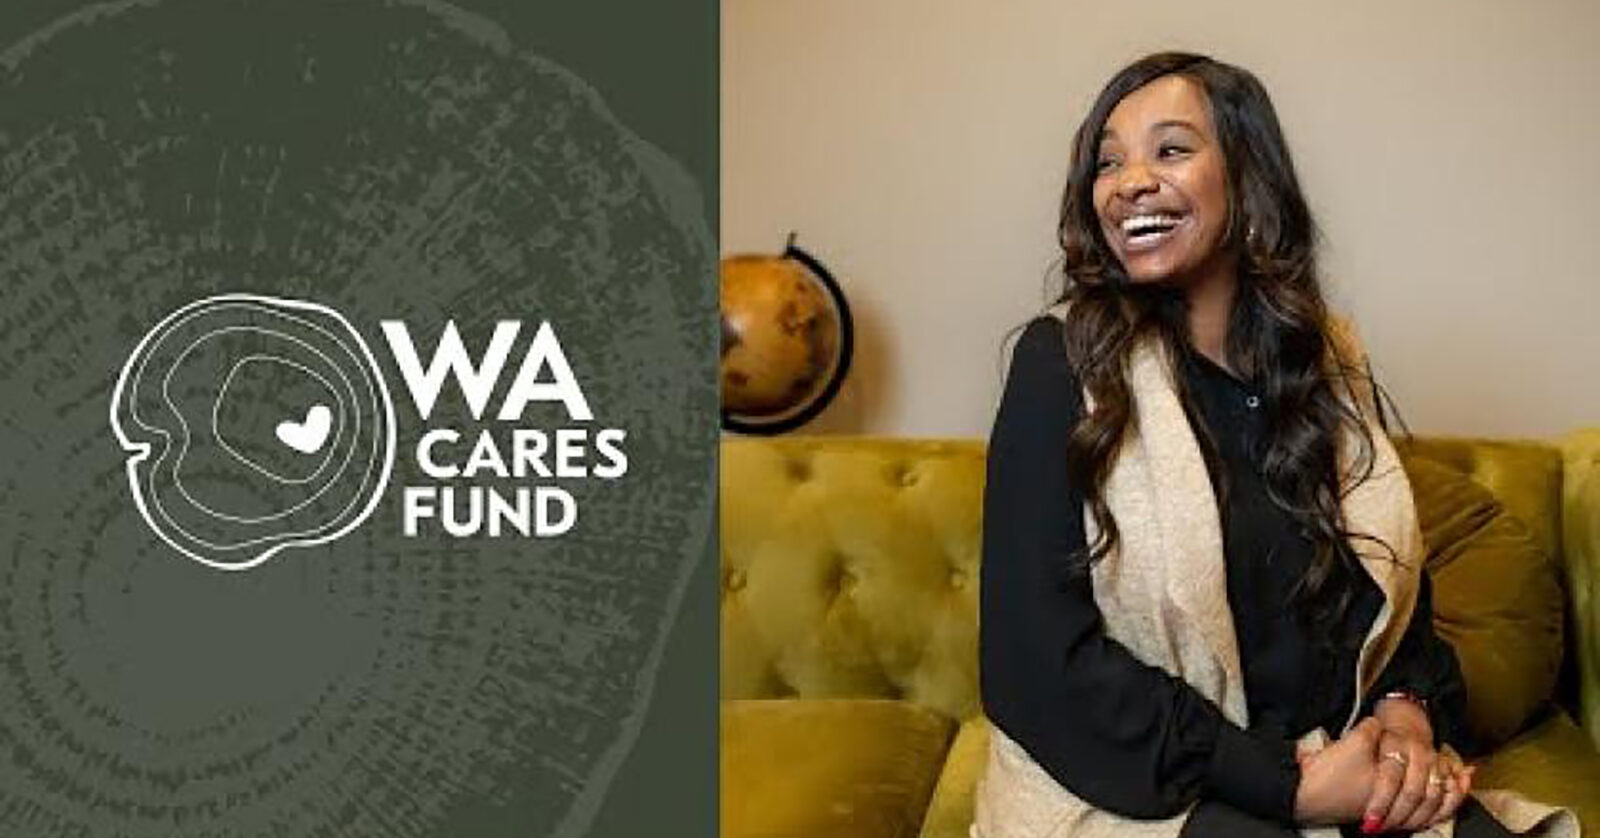 WA Cares Fund logo and photo of caregiver "KD"